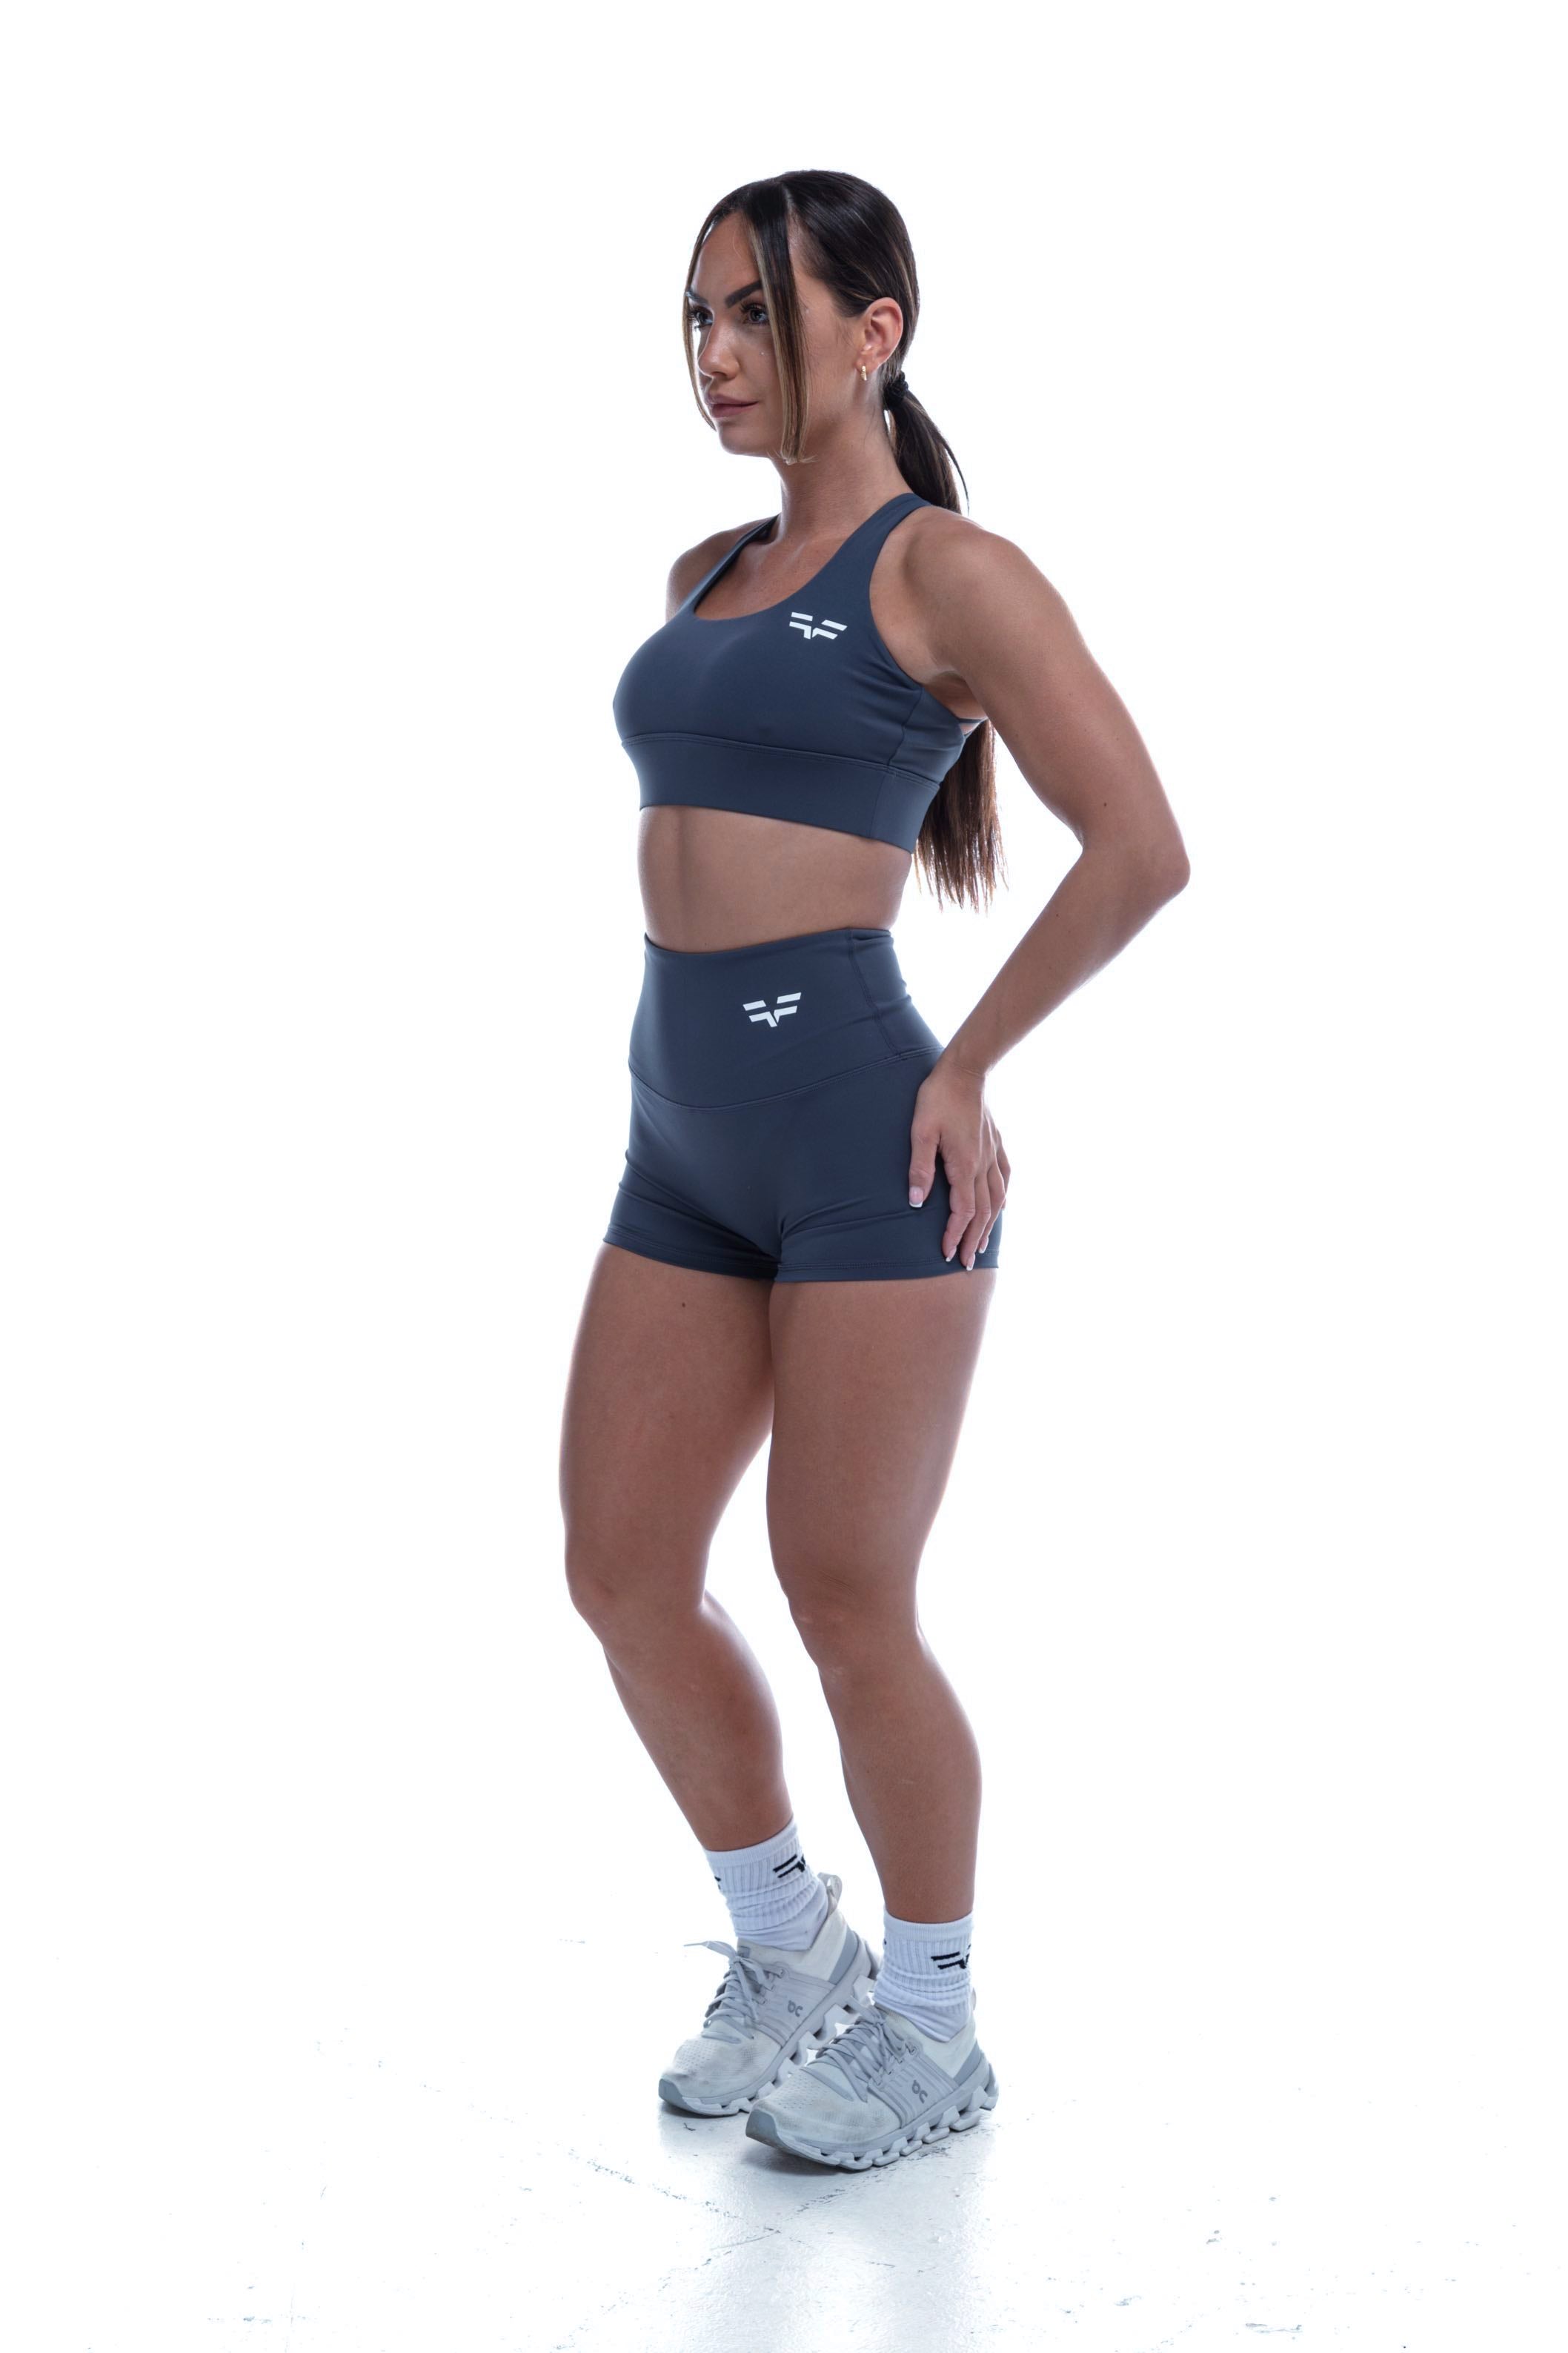 GymFreak Women's Vision Shorts - 2 inch Blue